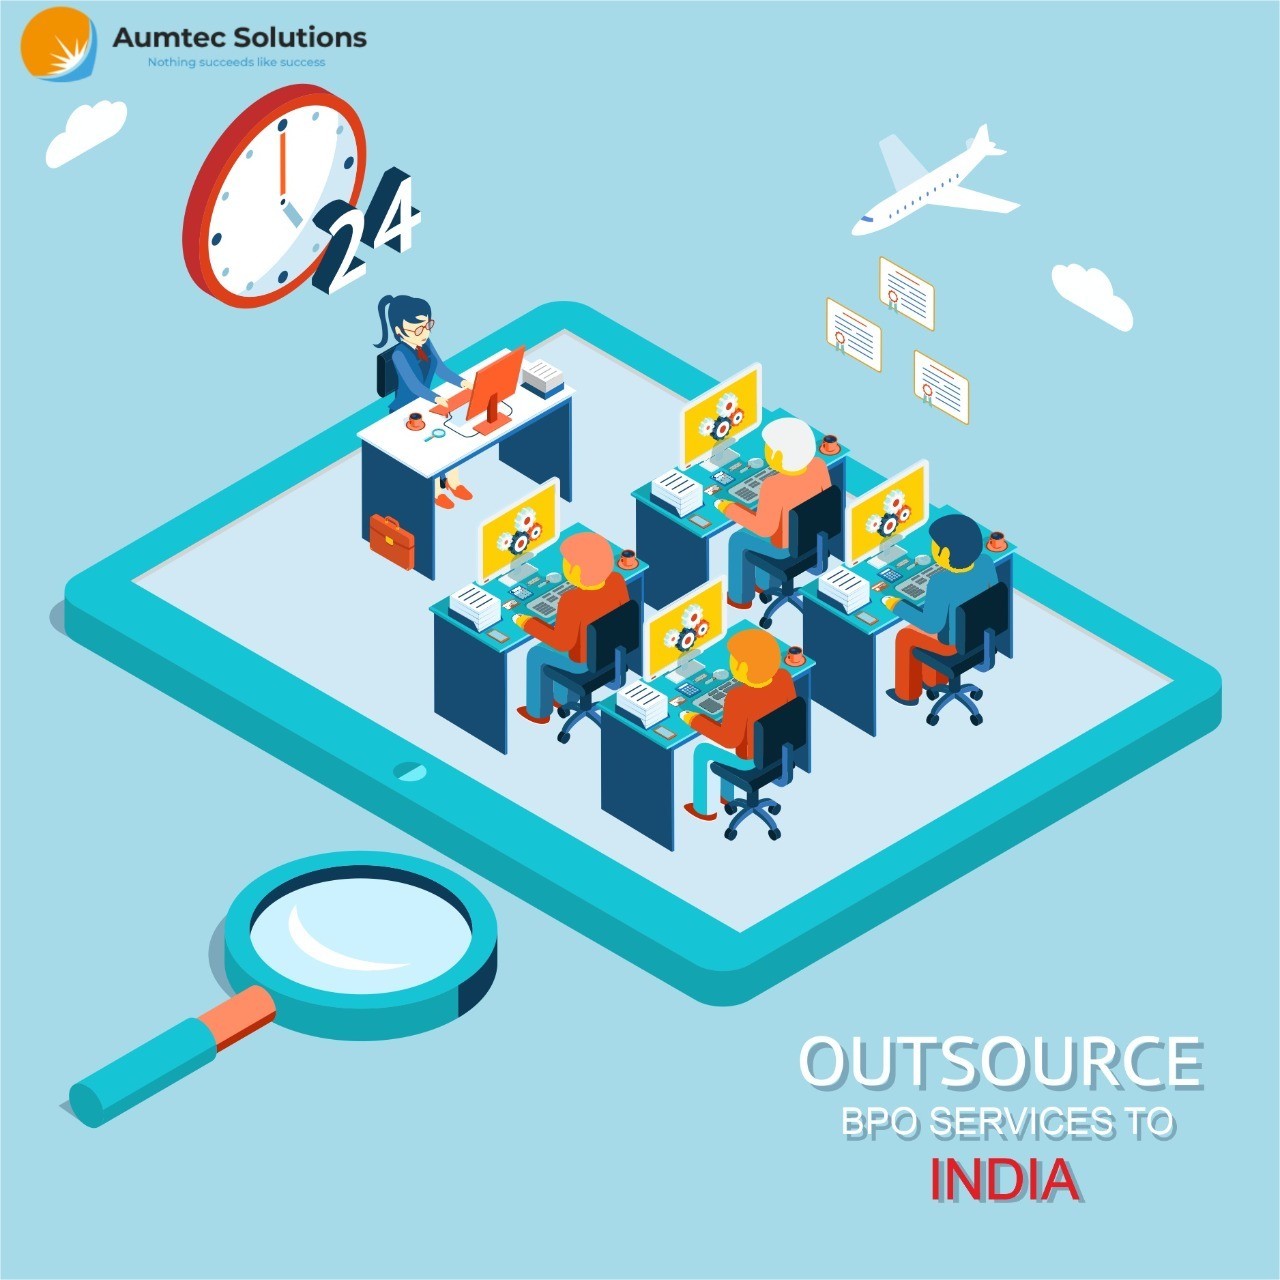 Outsource BPO services to India?